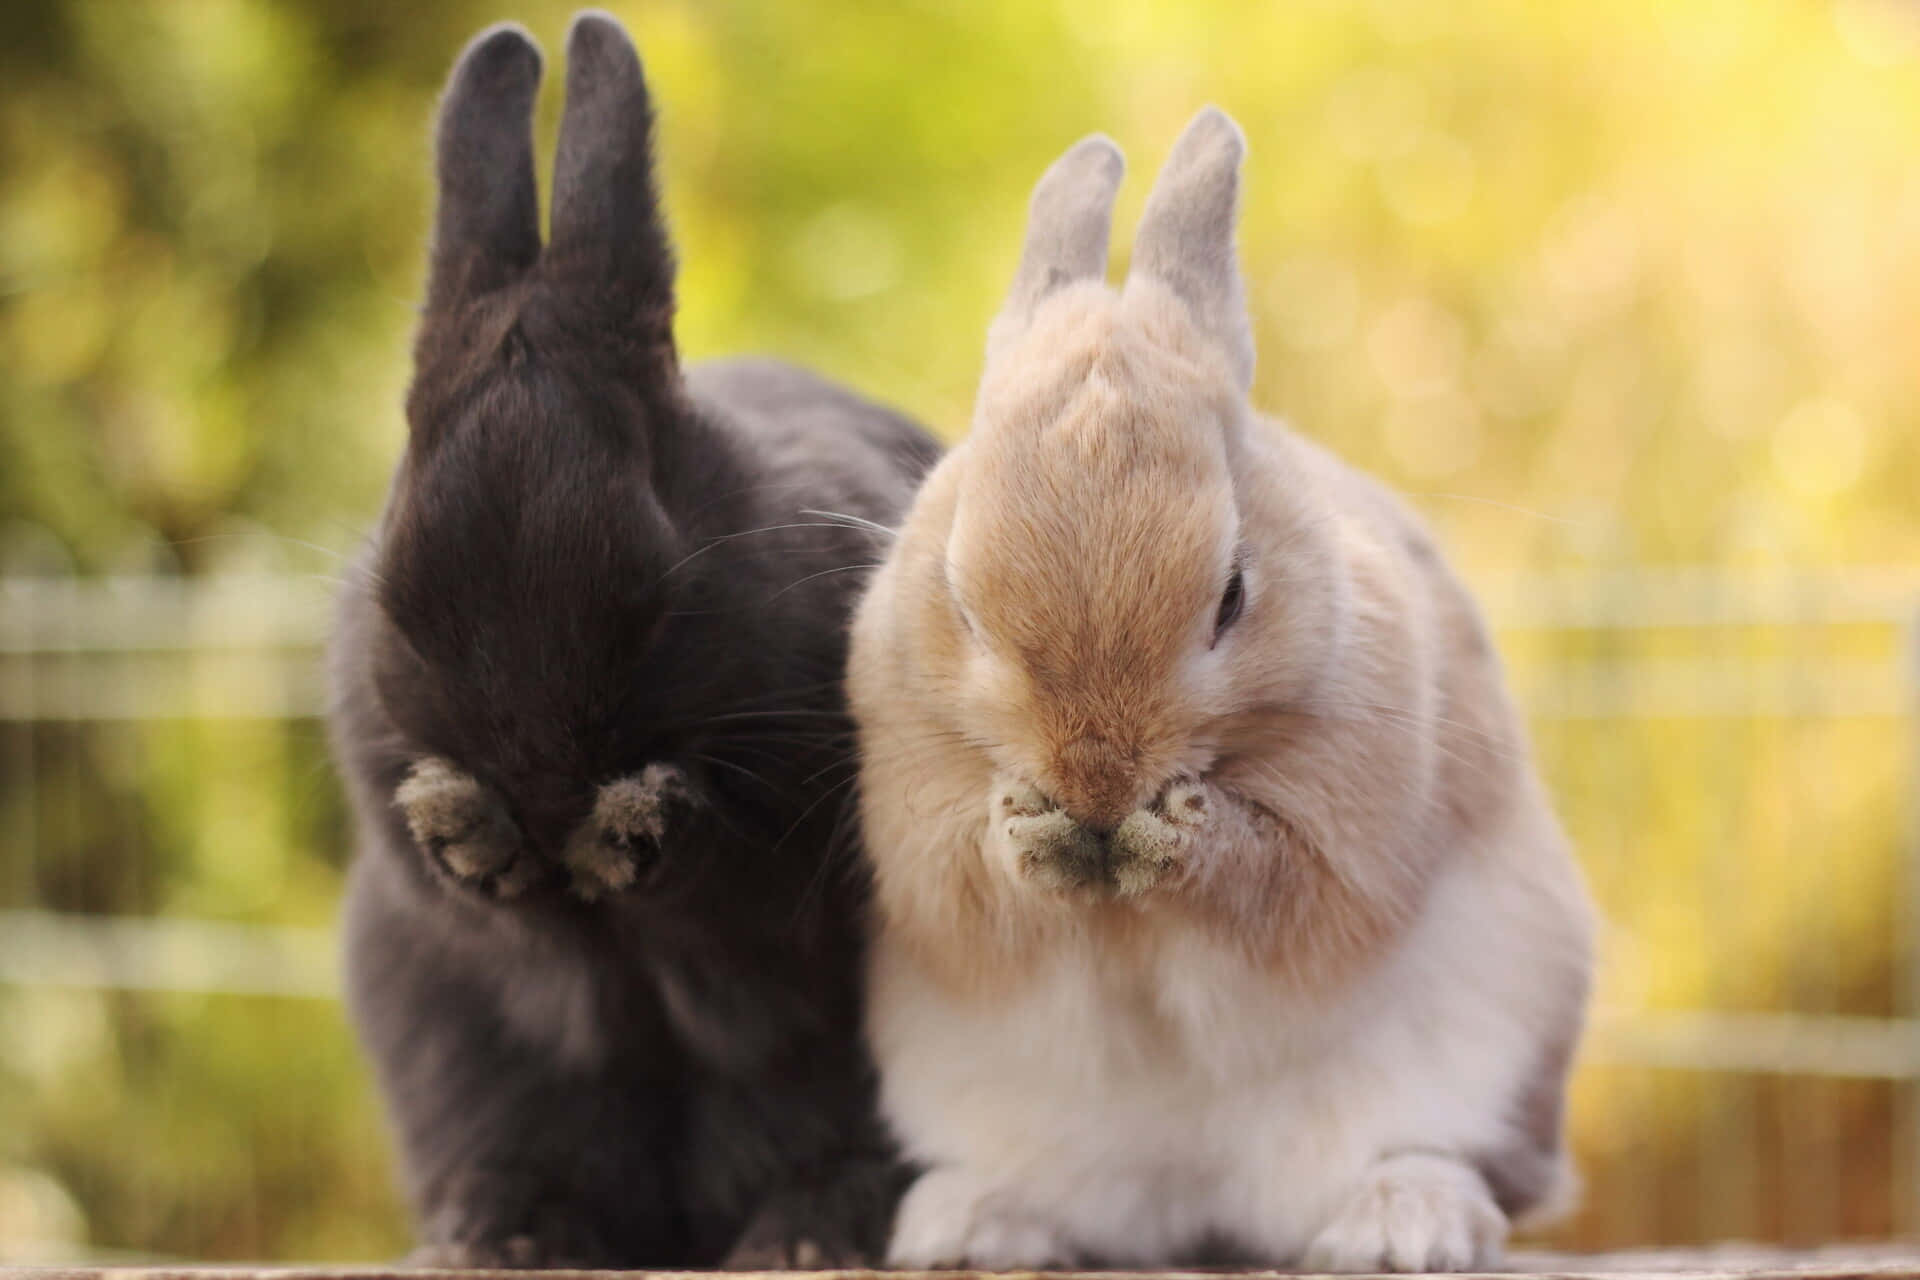 Adorable Bunny Rabbits Enjoying Their Day Wallpaper